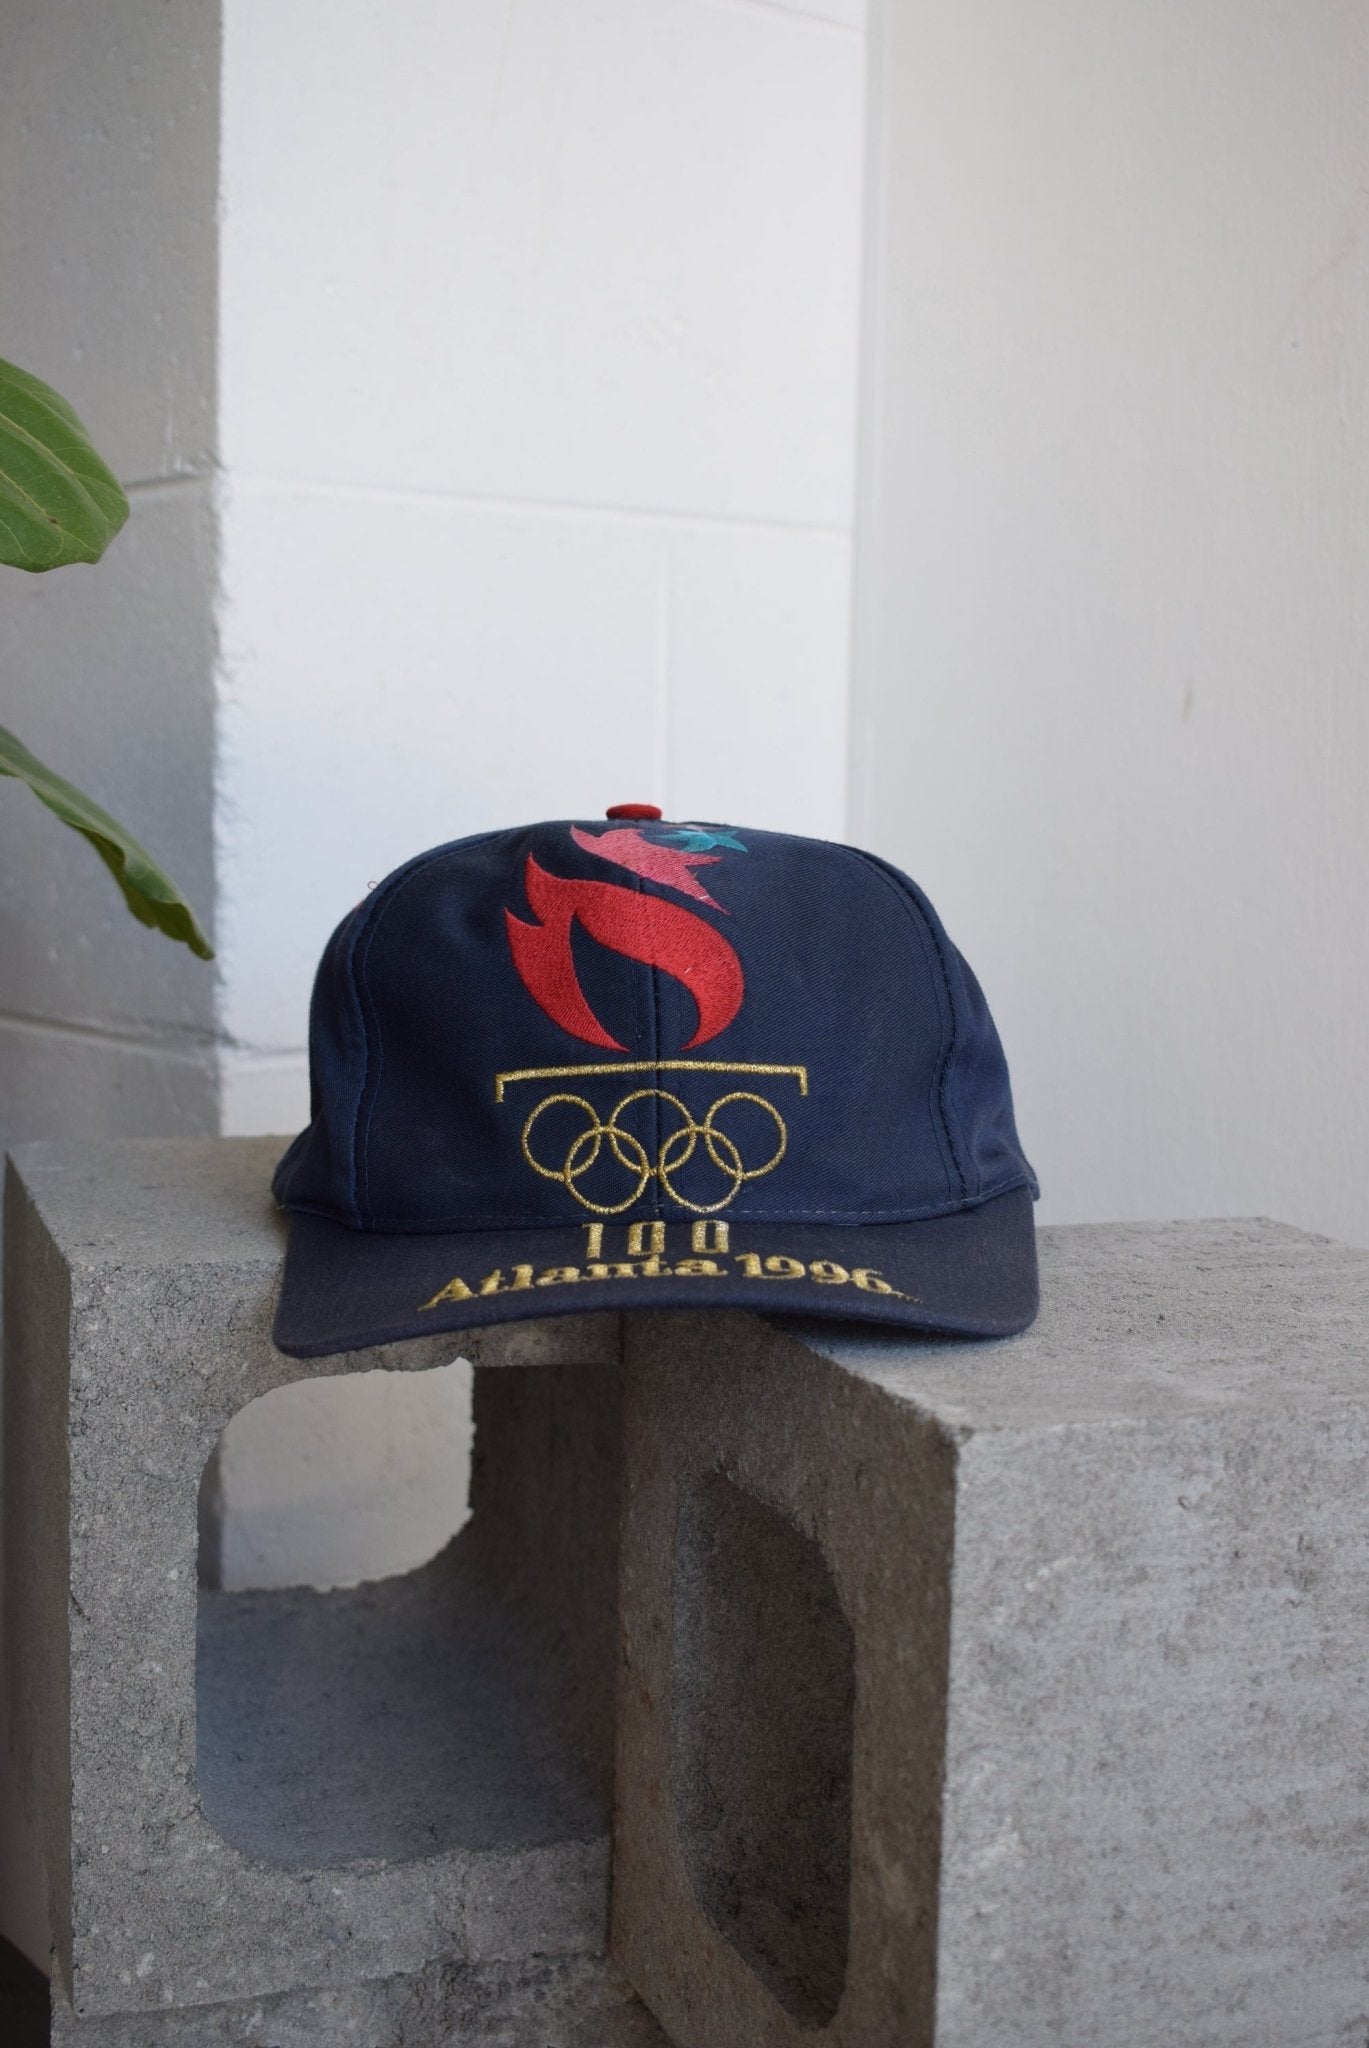 Vintage 1996 Atlanta Olympics Hat - Retrospective Store